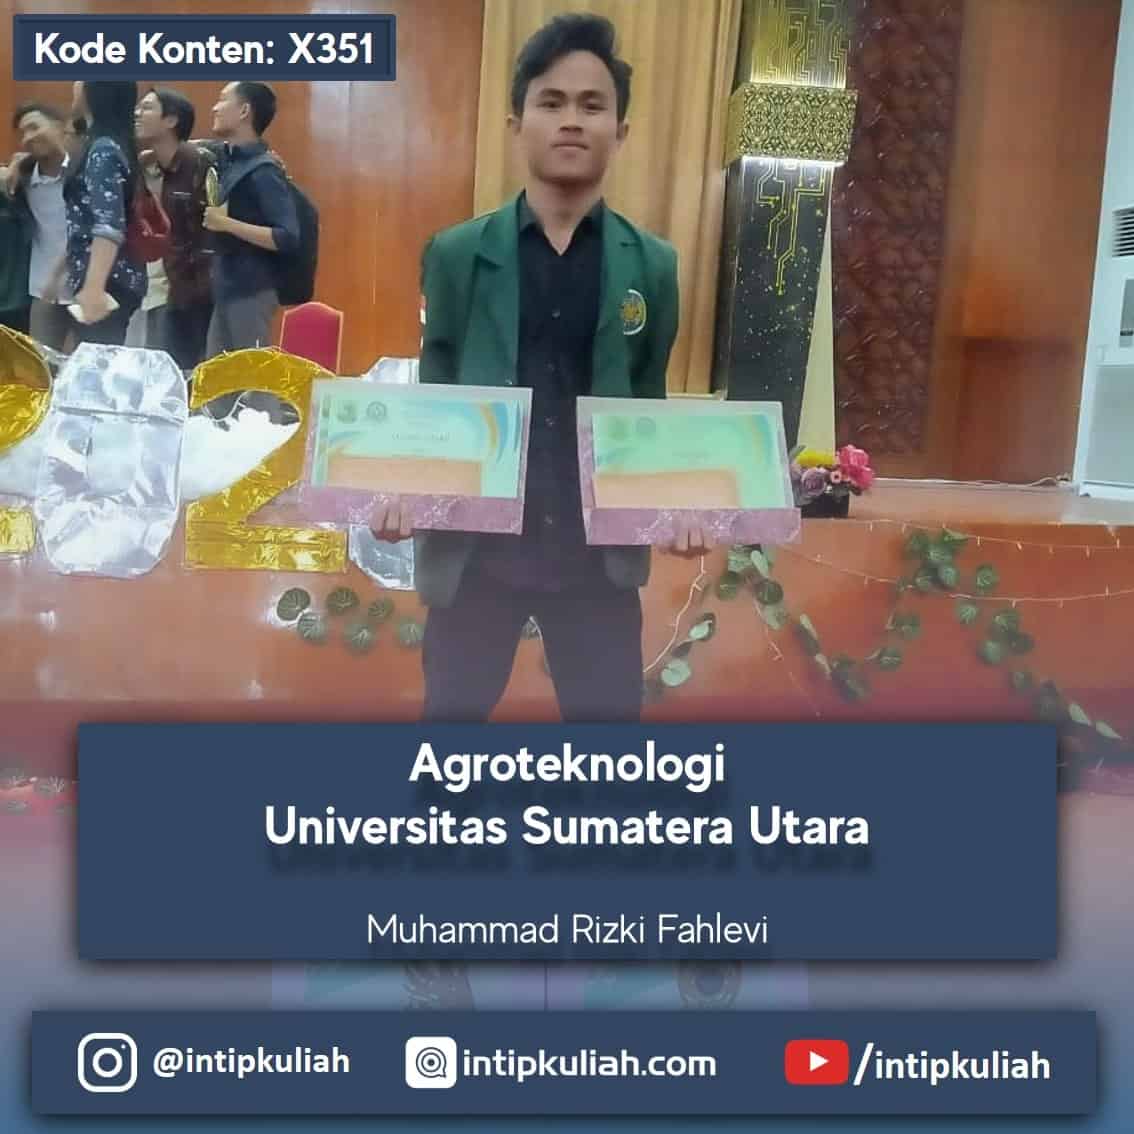 Agroteknologi Universitas Sumatera Utara (Fahlevi)